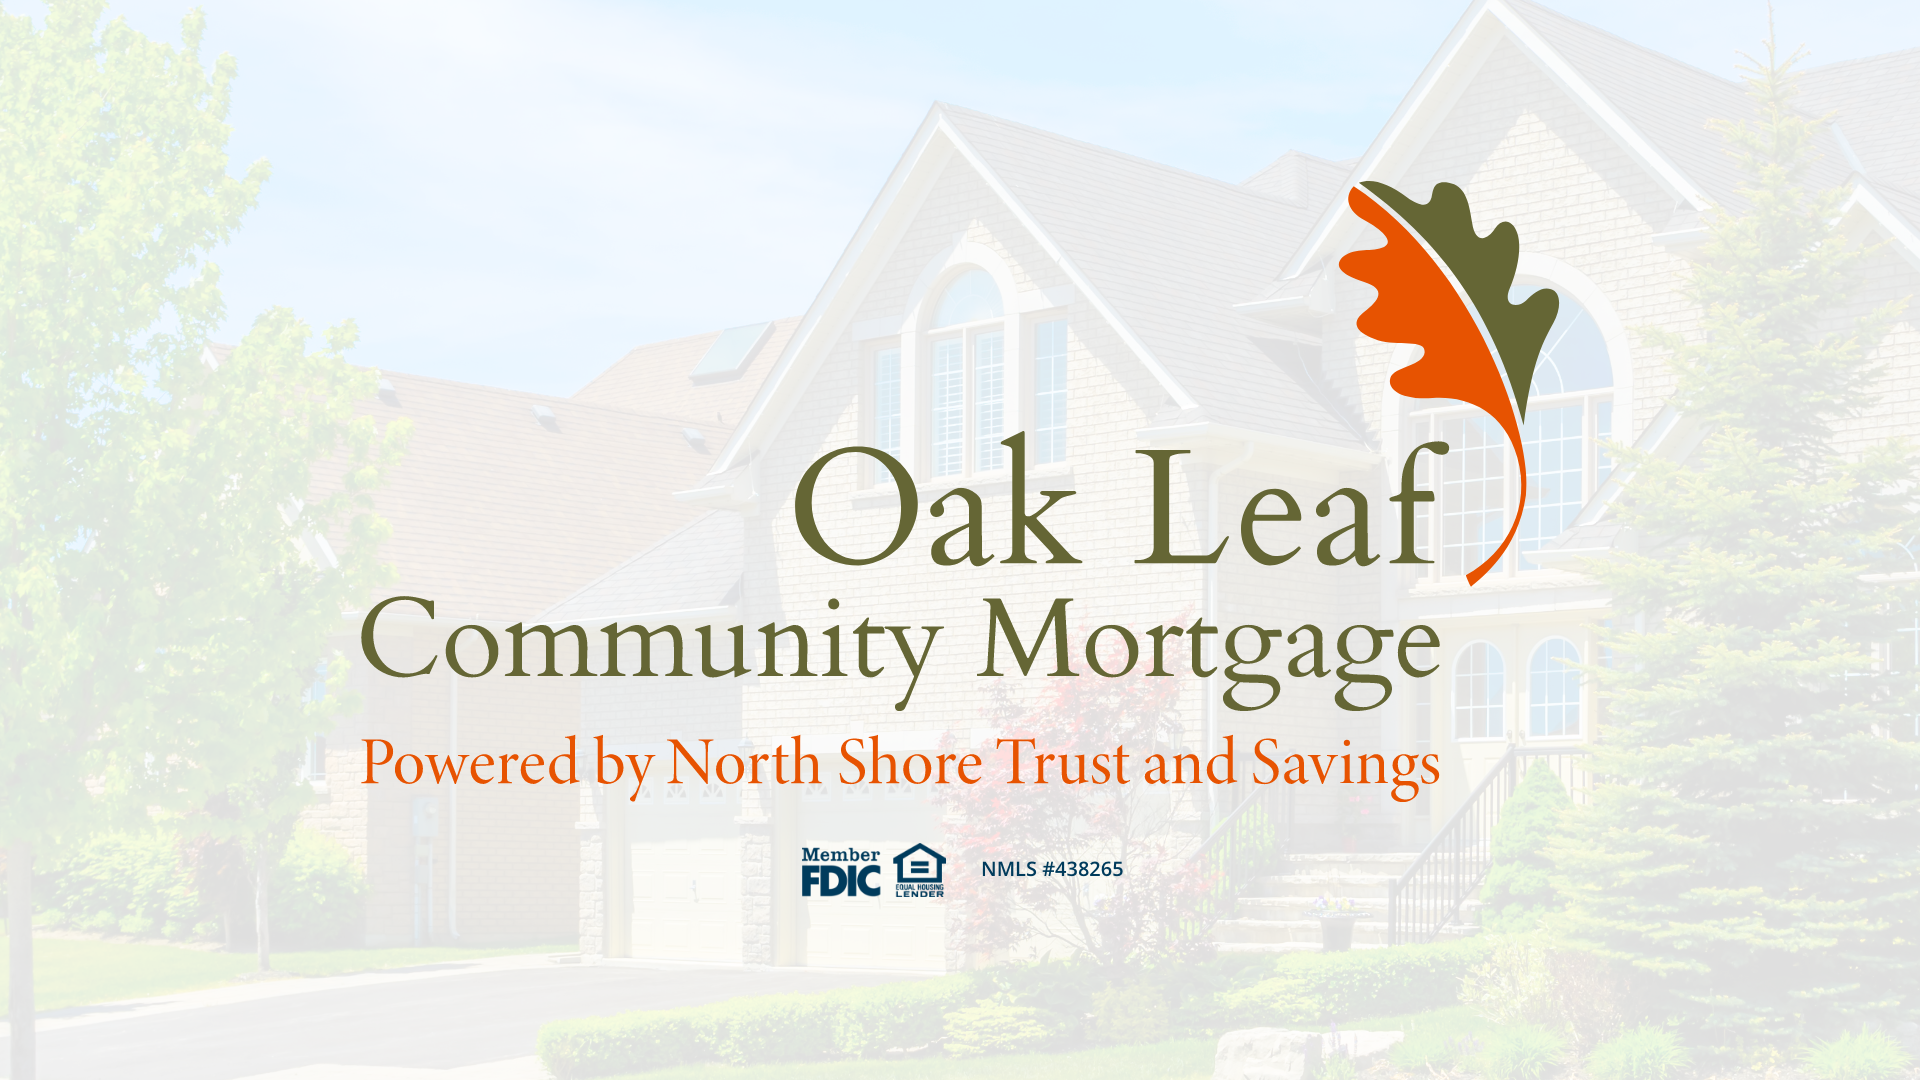 Oak Leaf Community Mortgage and North Shore Trust and Savings announce Landmark Partnership